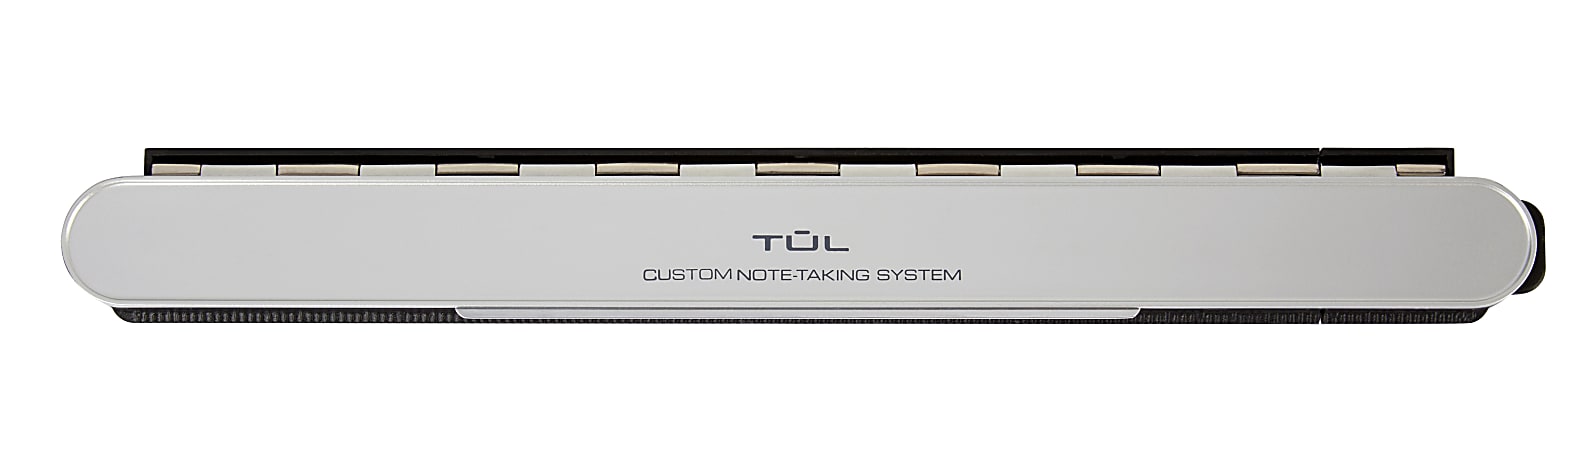 TUL Custom-Note Taking System 